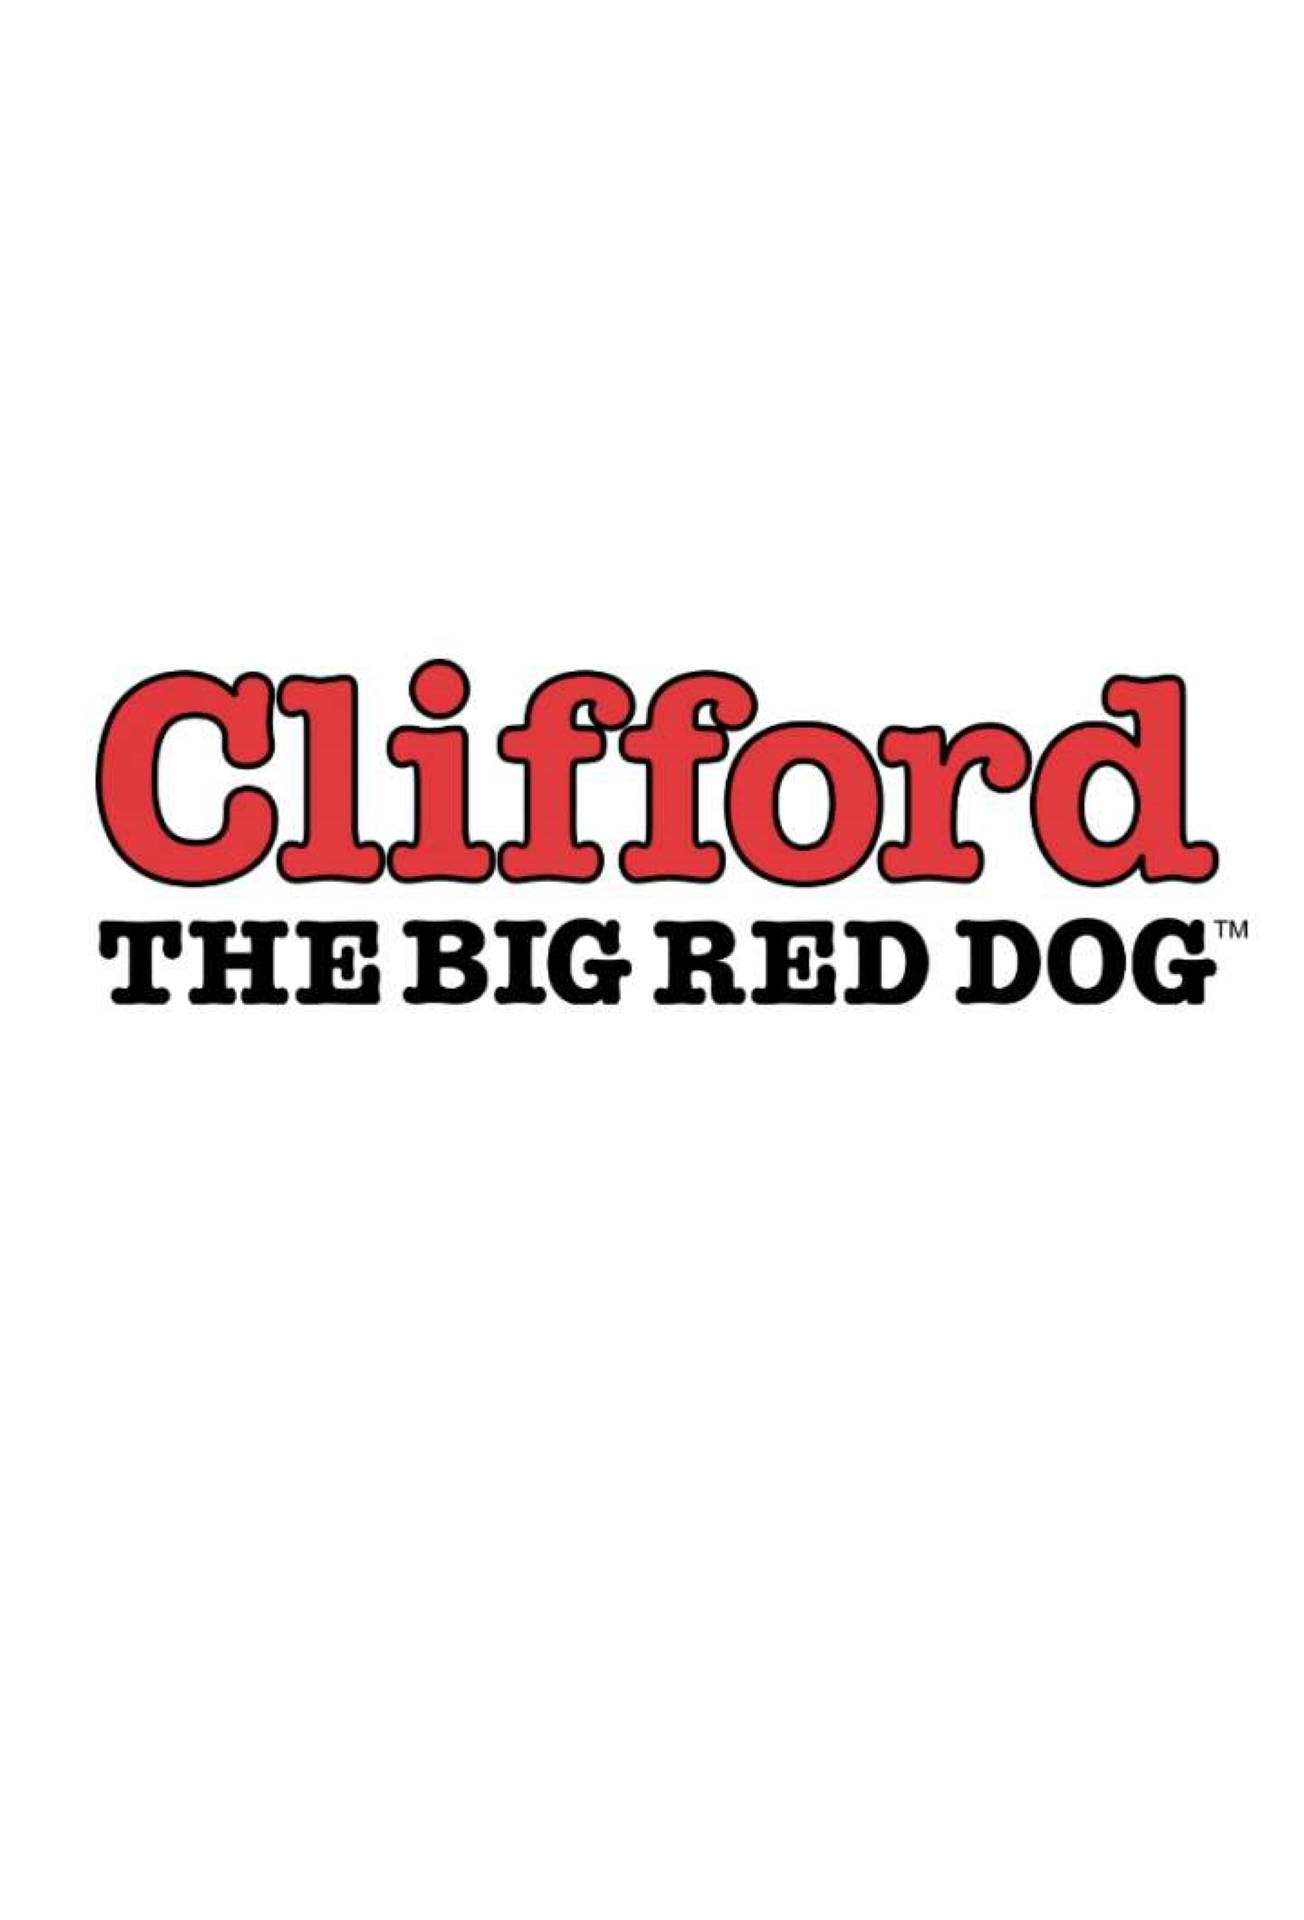 Clifford The Big Red Dog Logo Wallpaper